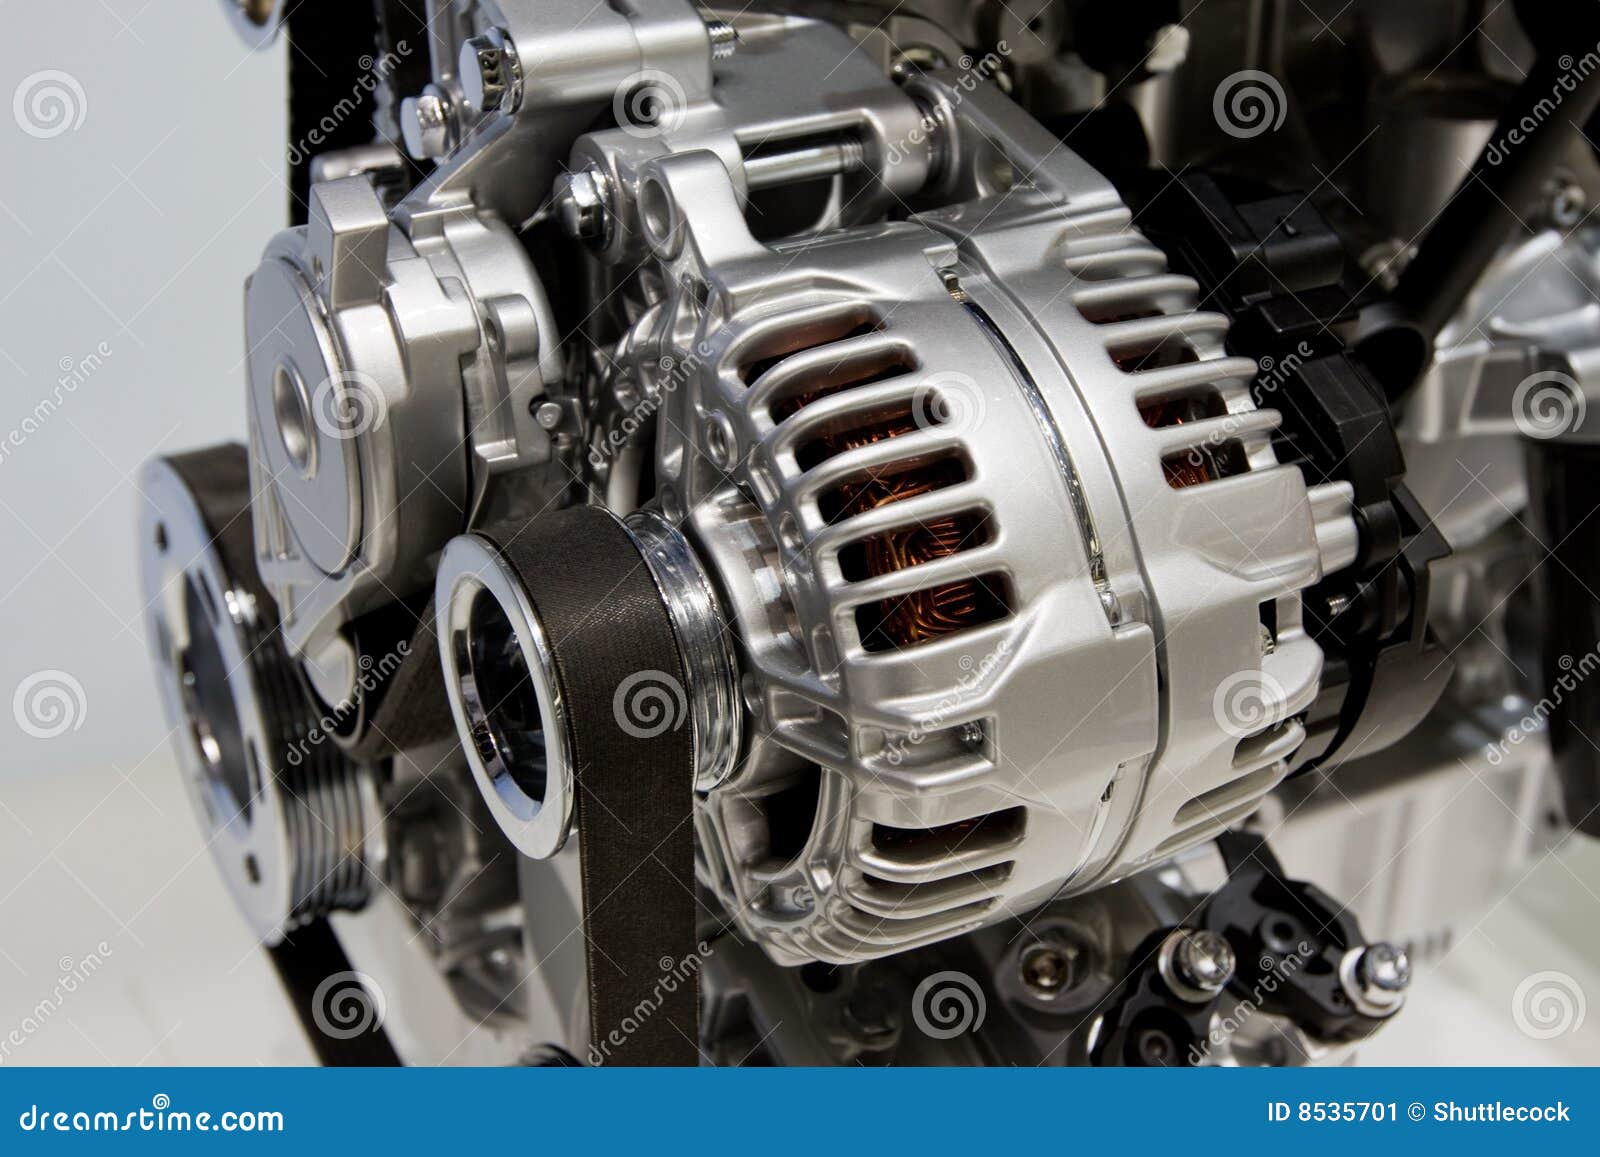 closeup of an internal combustion engine